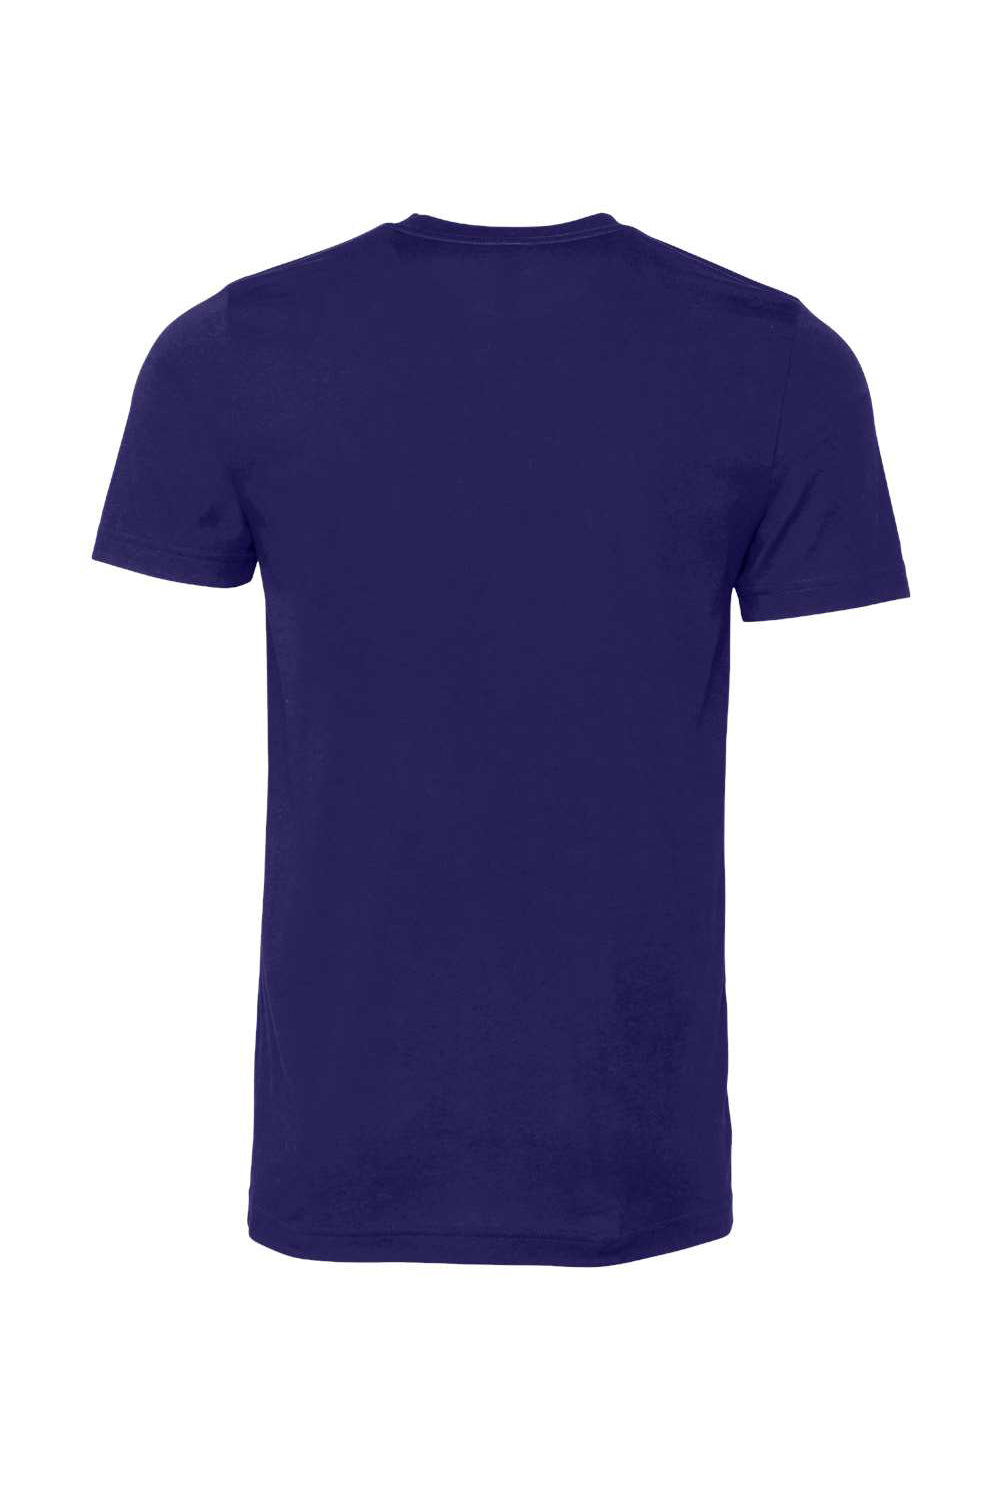 Bella + Canvas BC3001/3001C Mens Jersey Short Sleeve Crewneck T-Shirt Team Navy Blue Flat Back